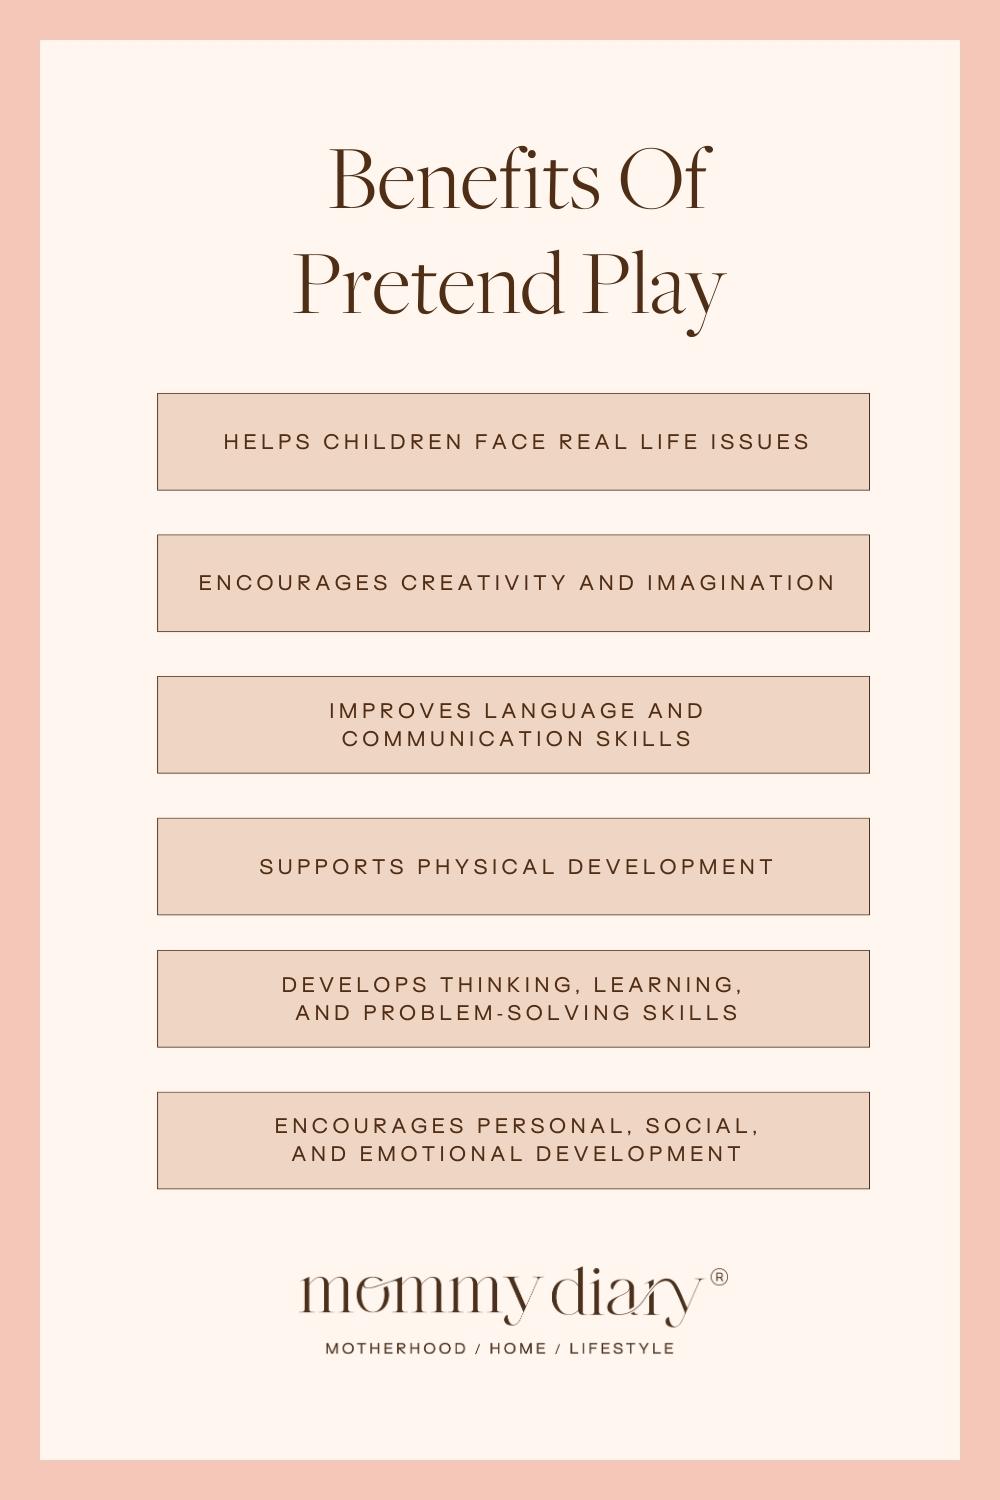 Benefits Of Pretend Play List